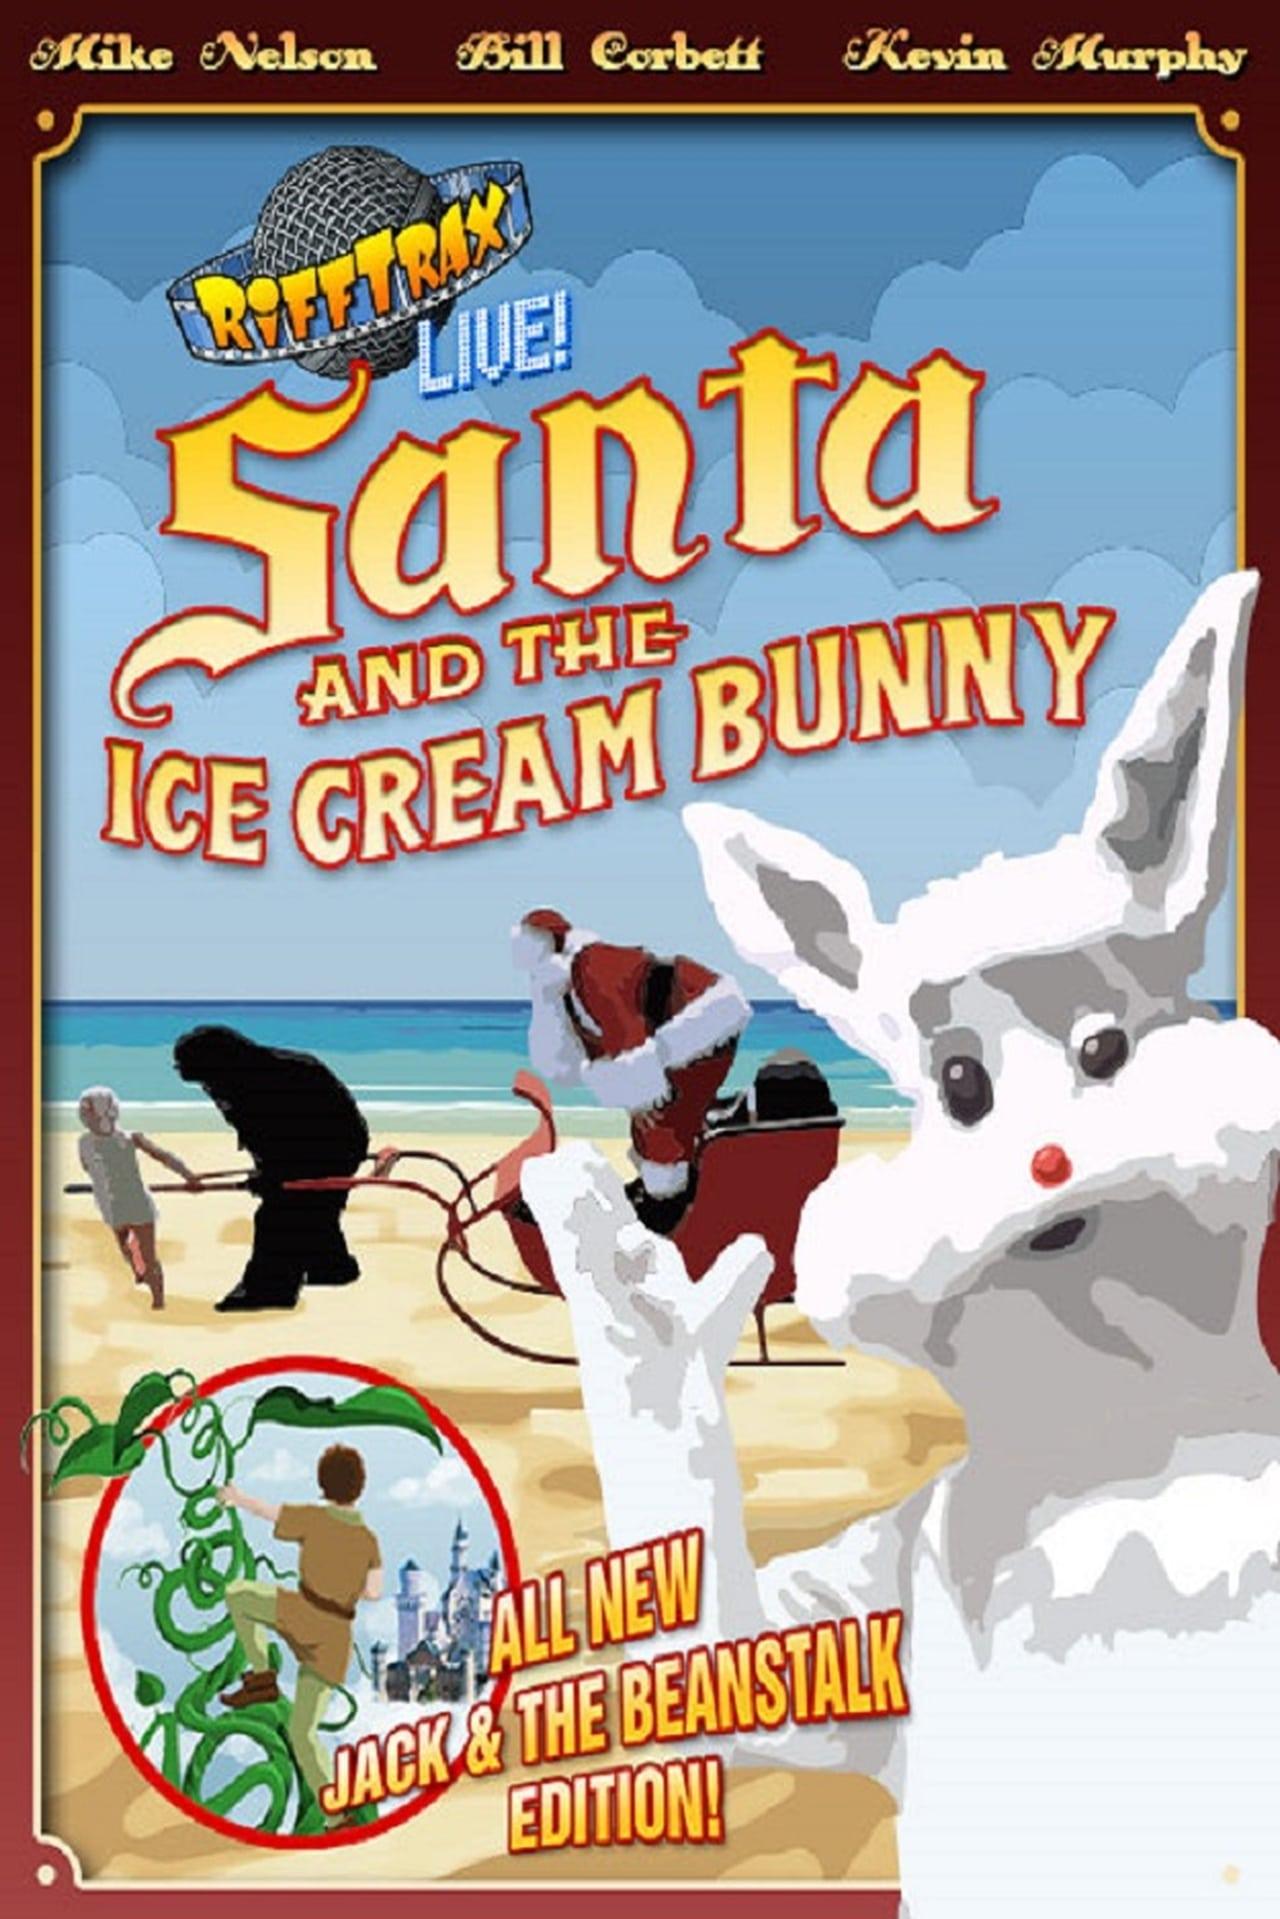 RiffTrax Live: Santa and the Ice Cream Bunny poster